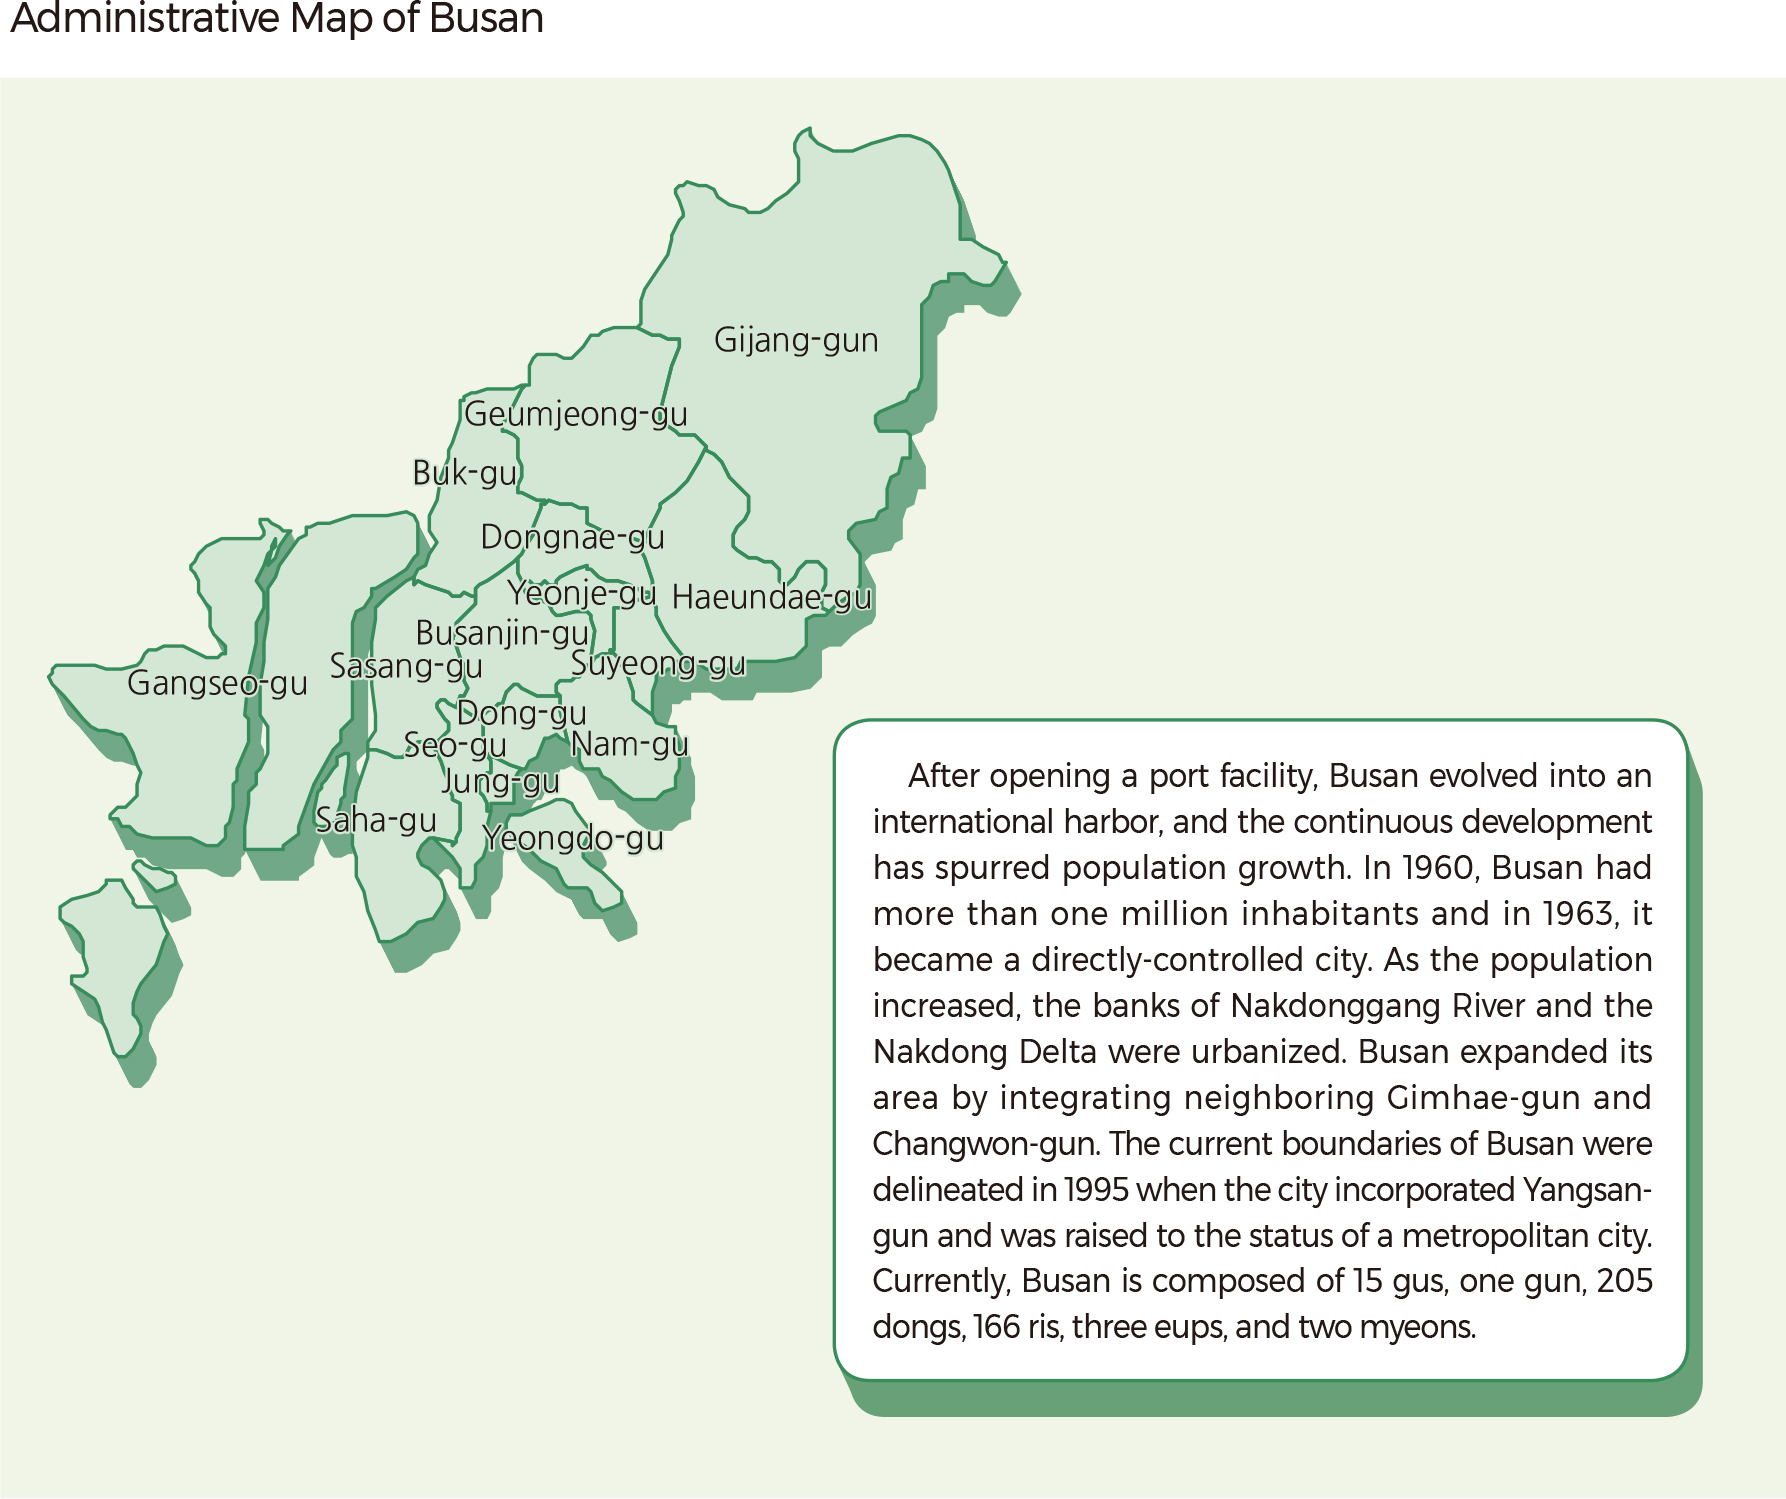 Administrative Map of Busan